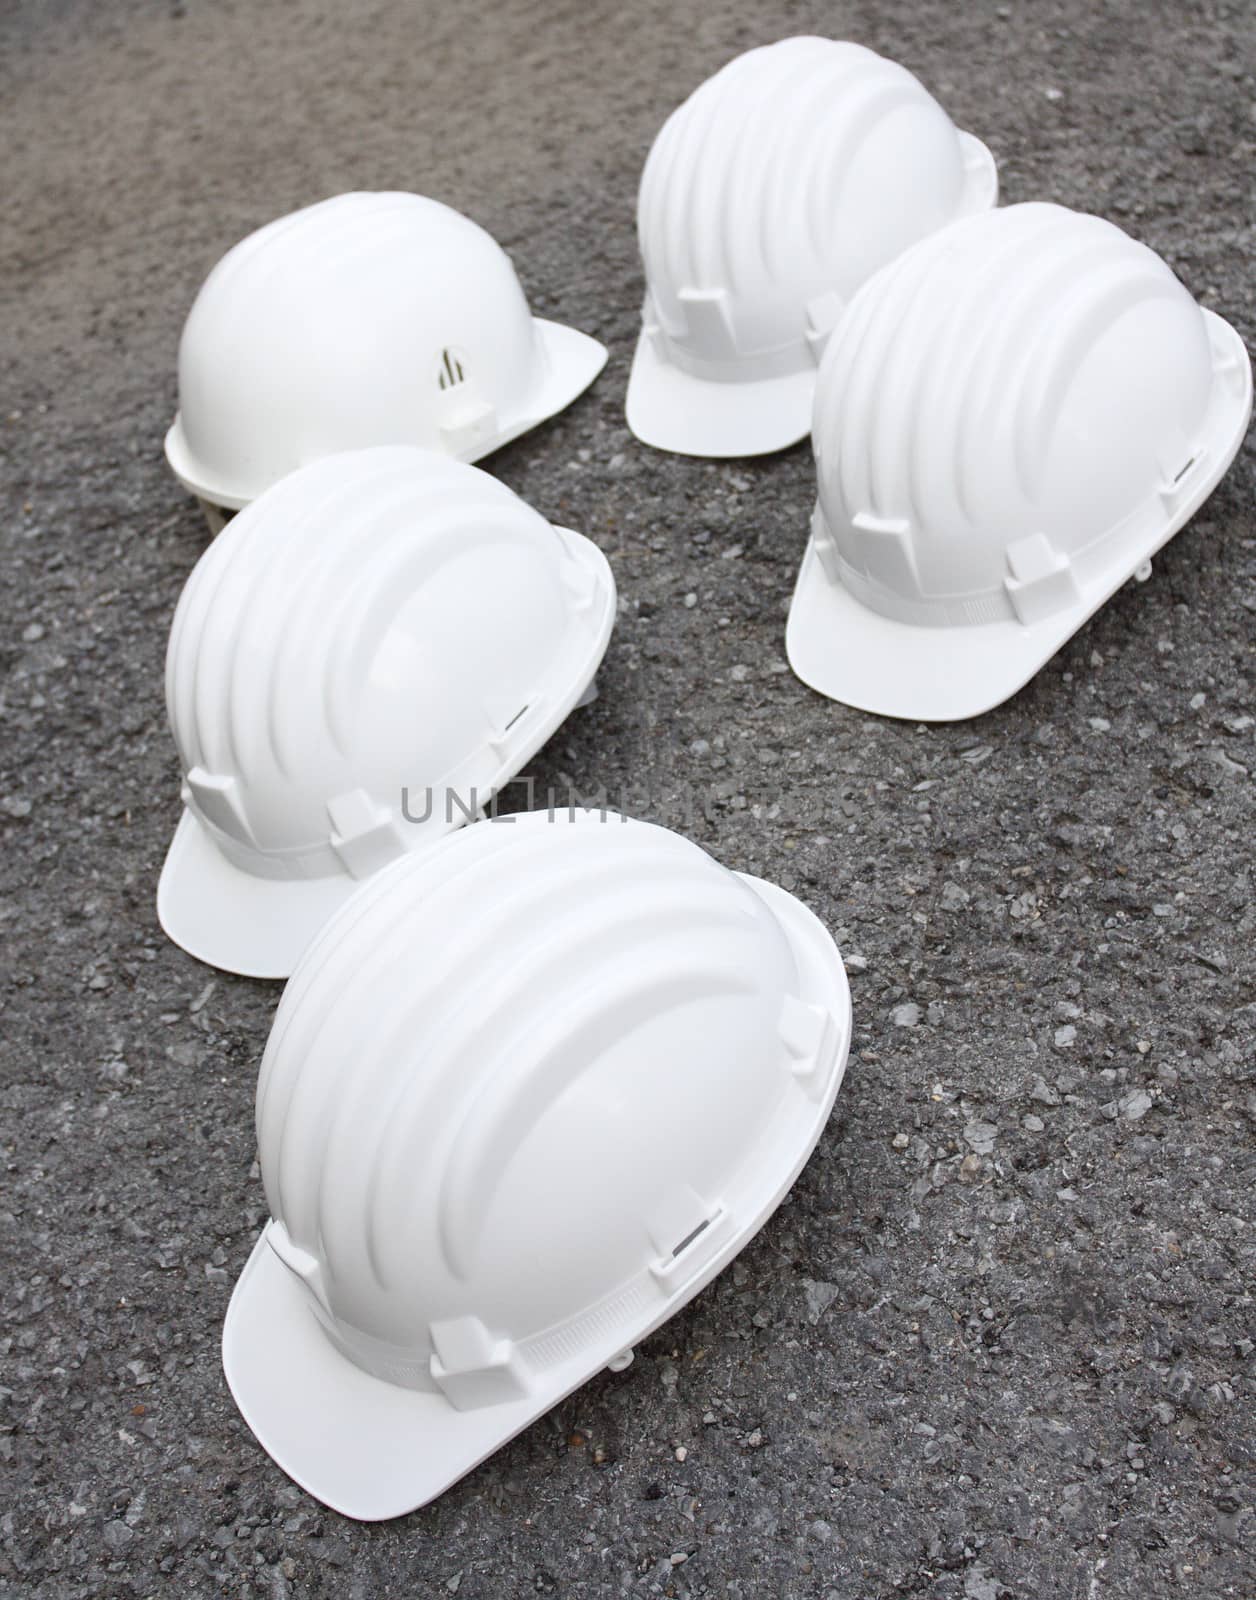 Five white helmets on the floor